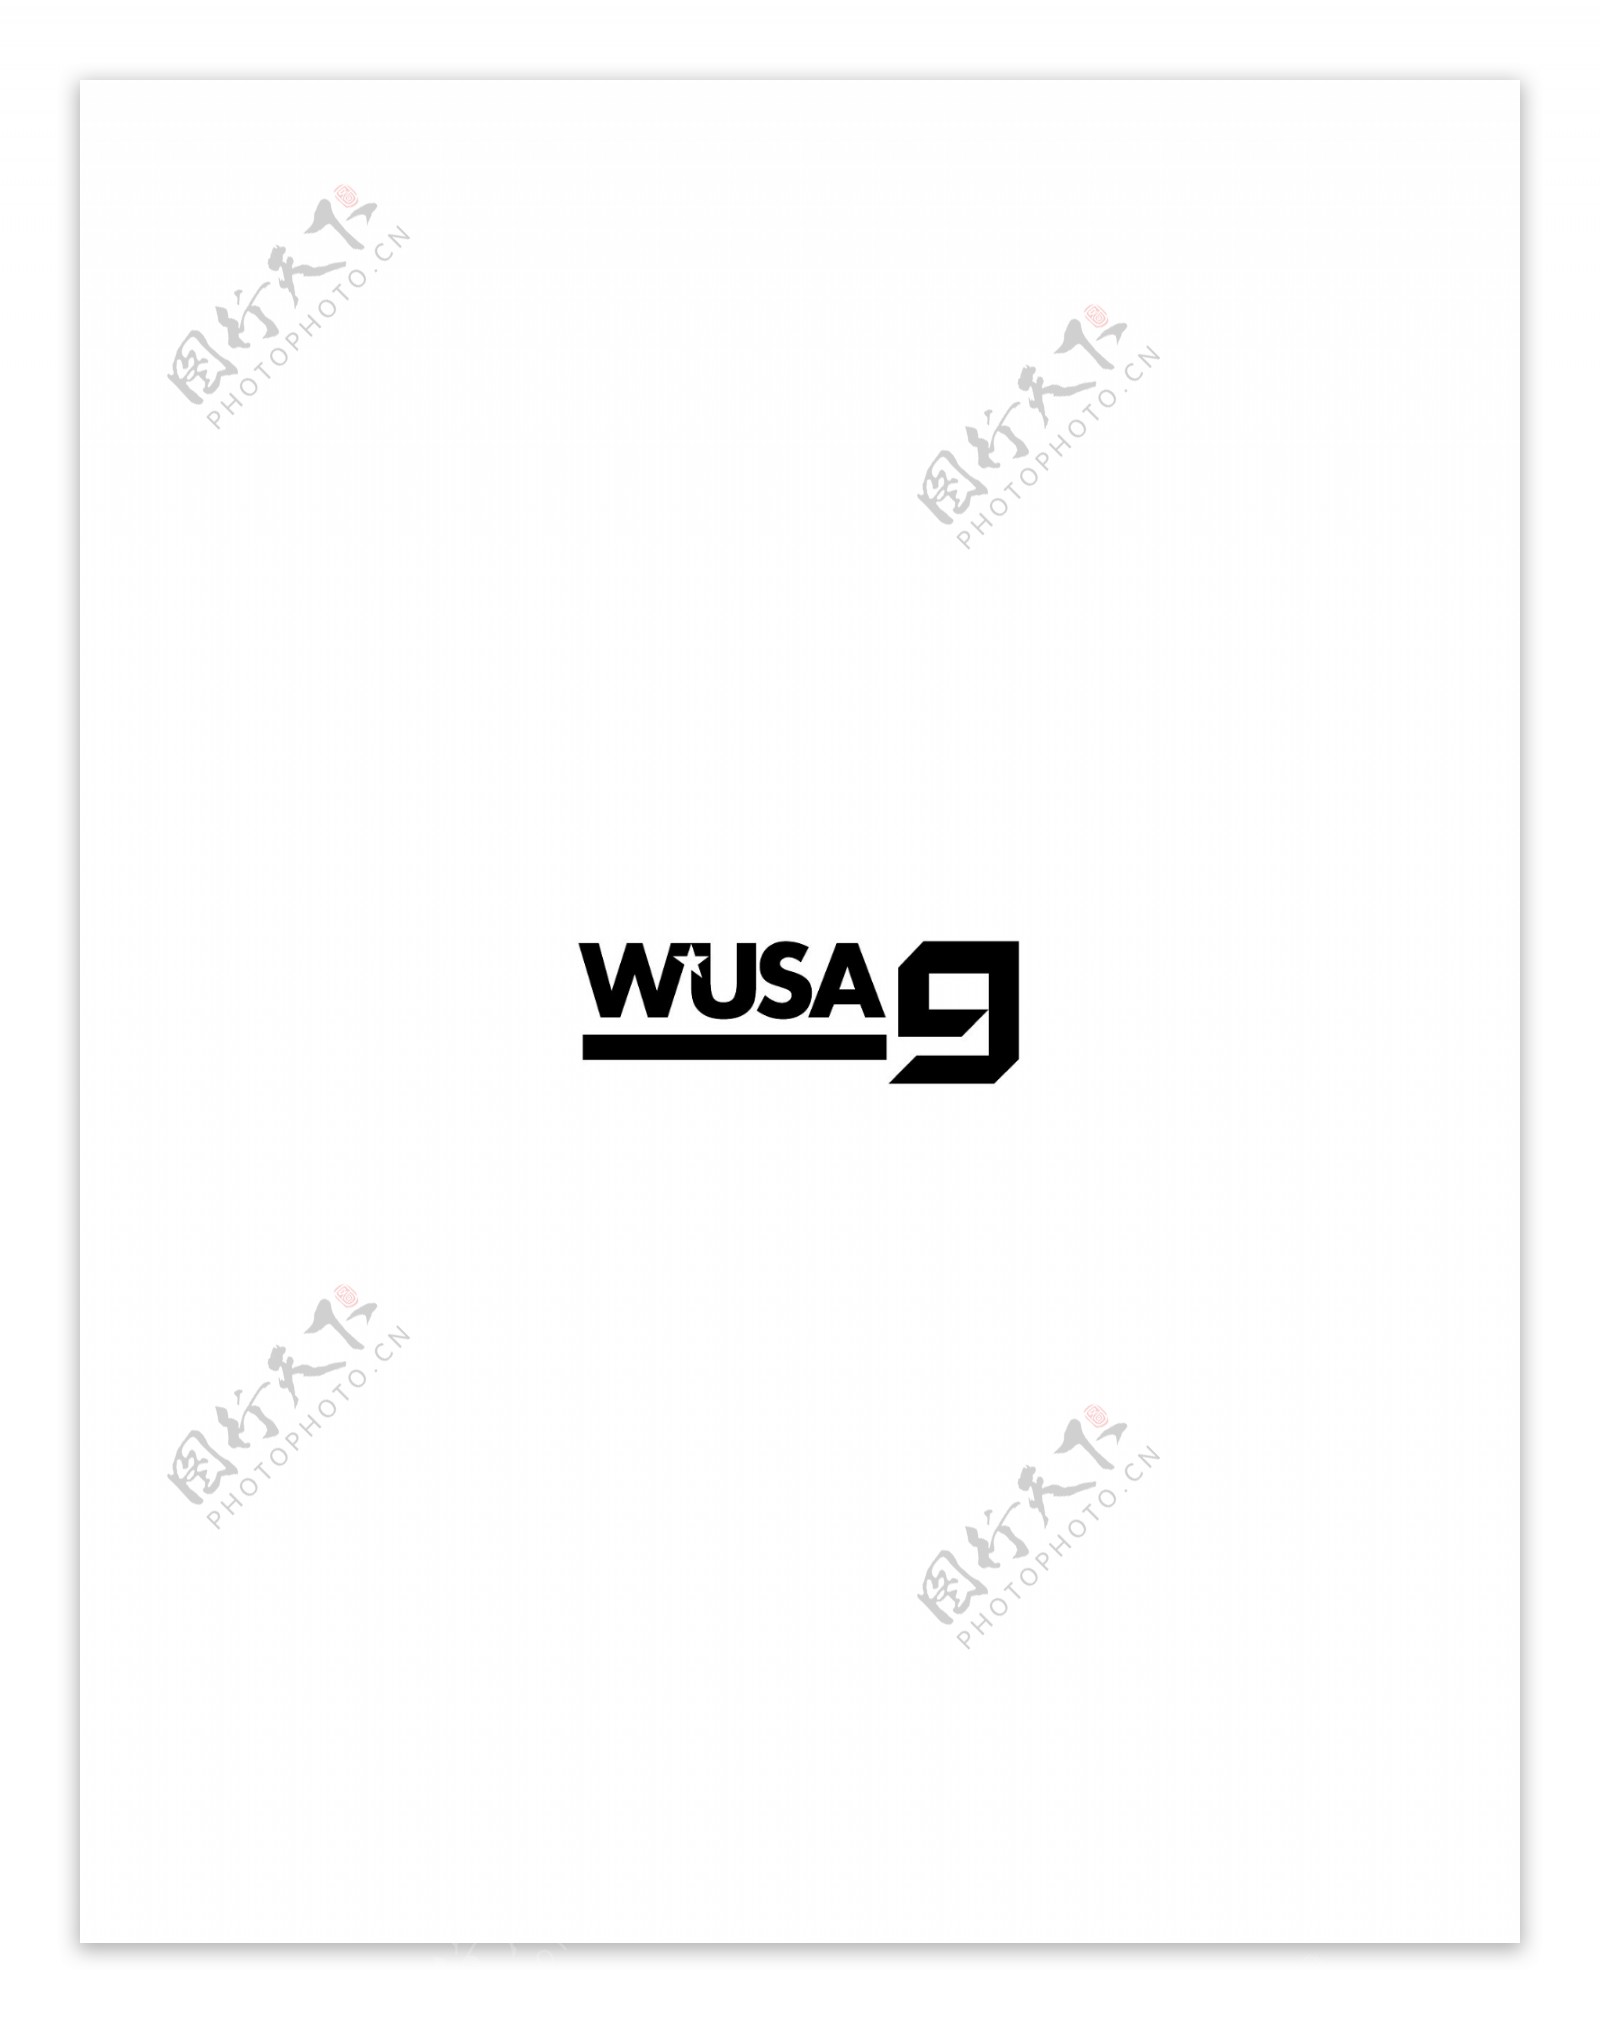 WUSA9TVlogo设计欣赏IT软件公司标志WUSA9TV下载标志设计欣赏